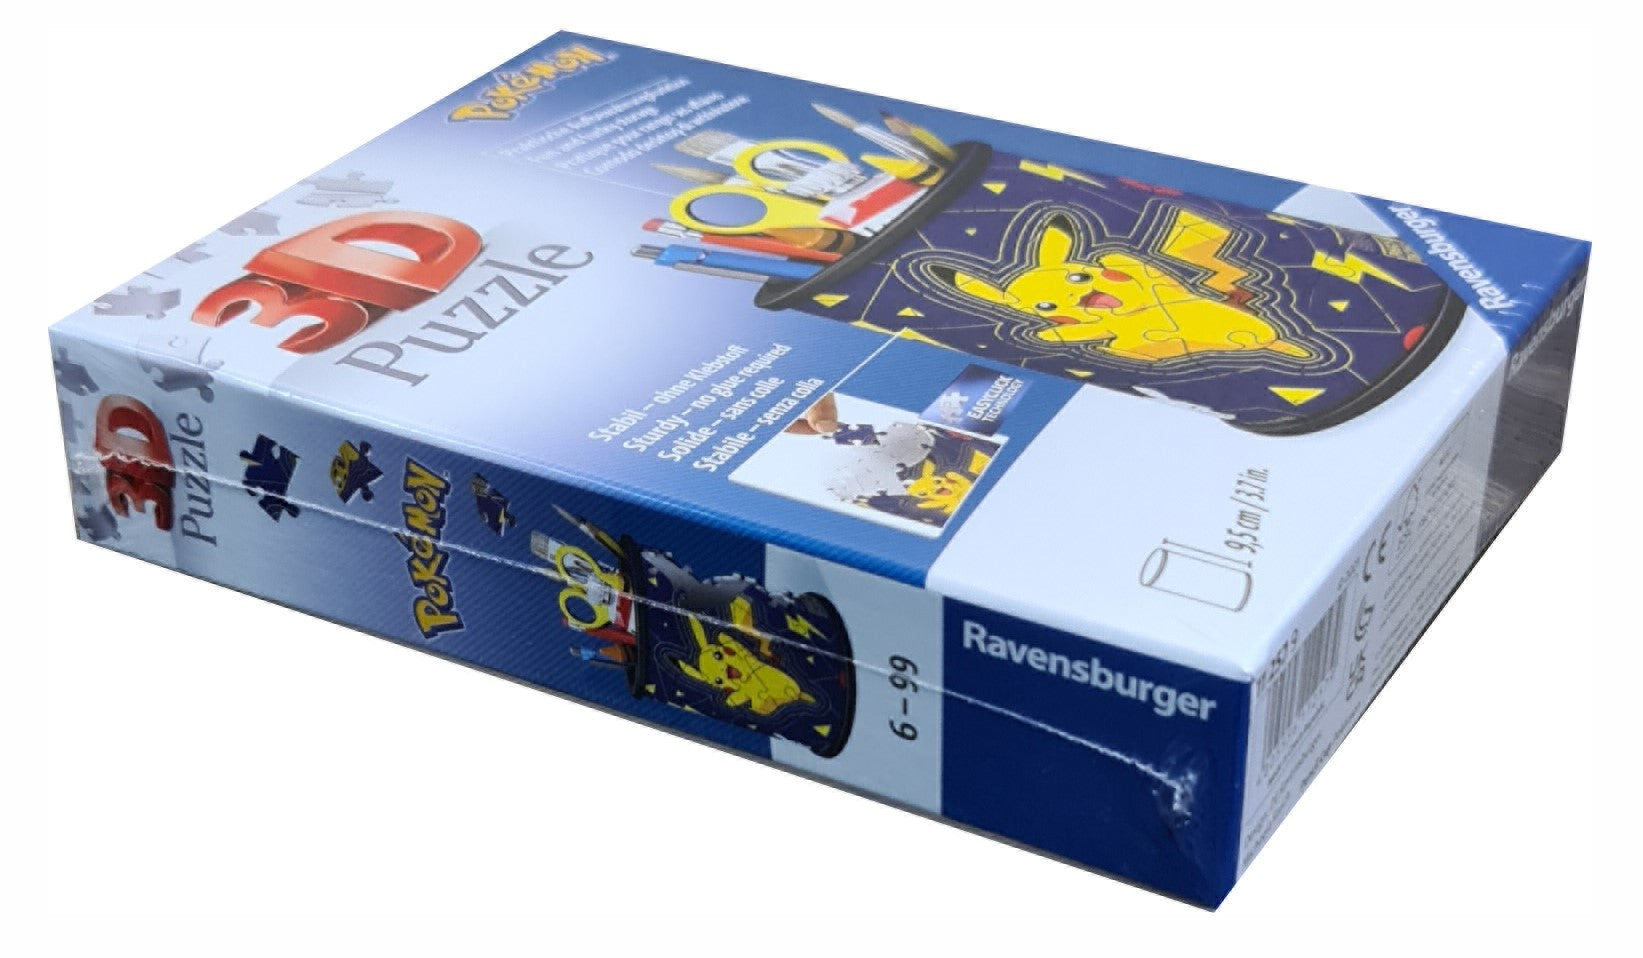 Ravensburger Pokemon 3D Puzzle Organizer Pokemon Storage Box